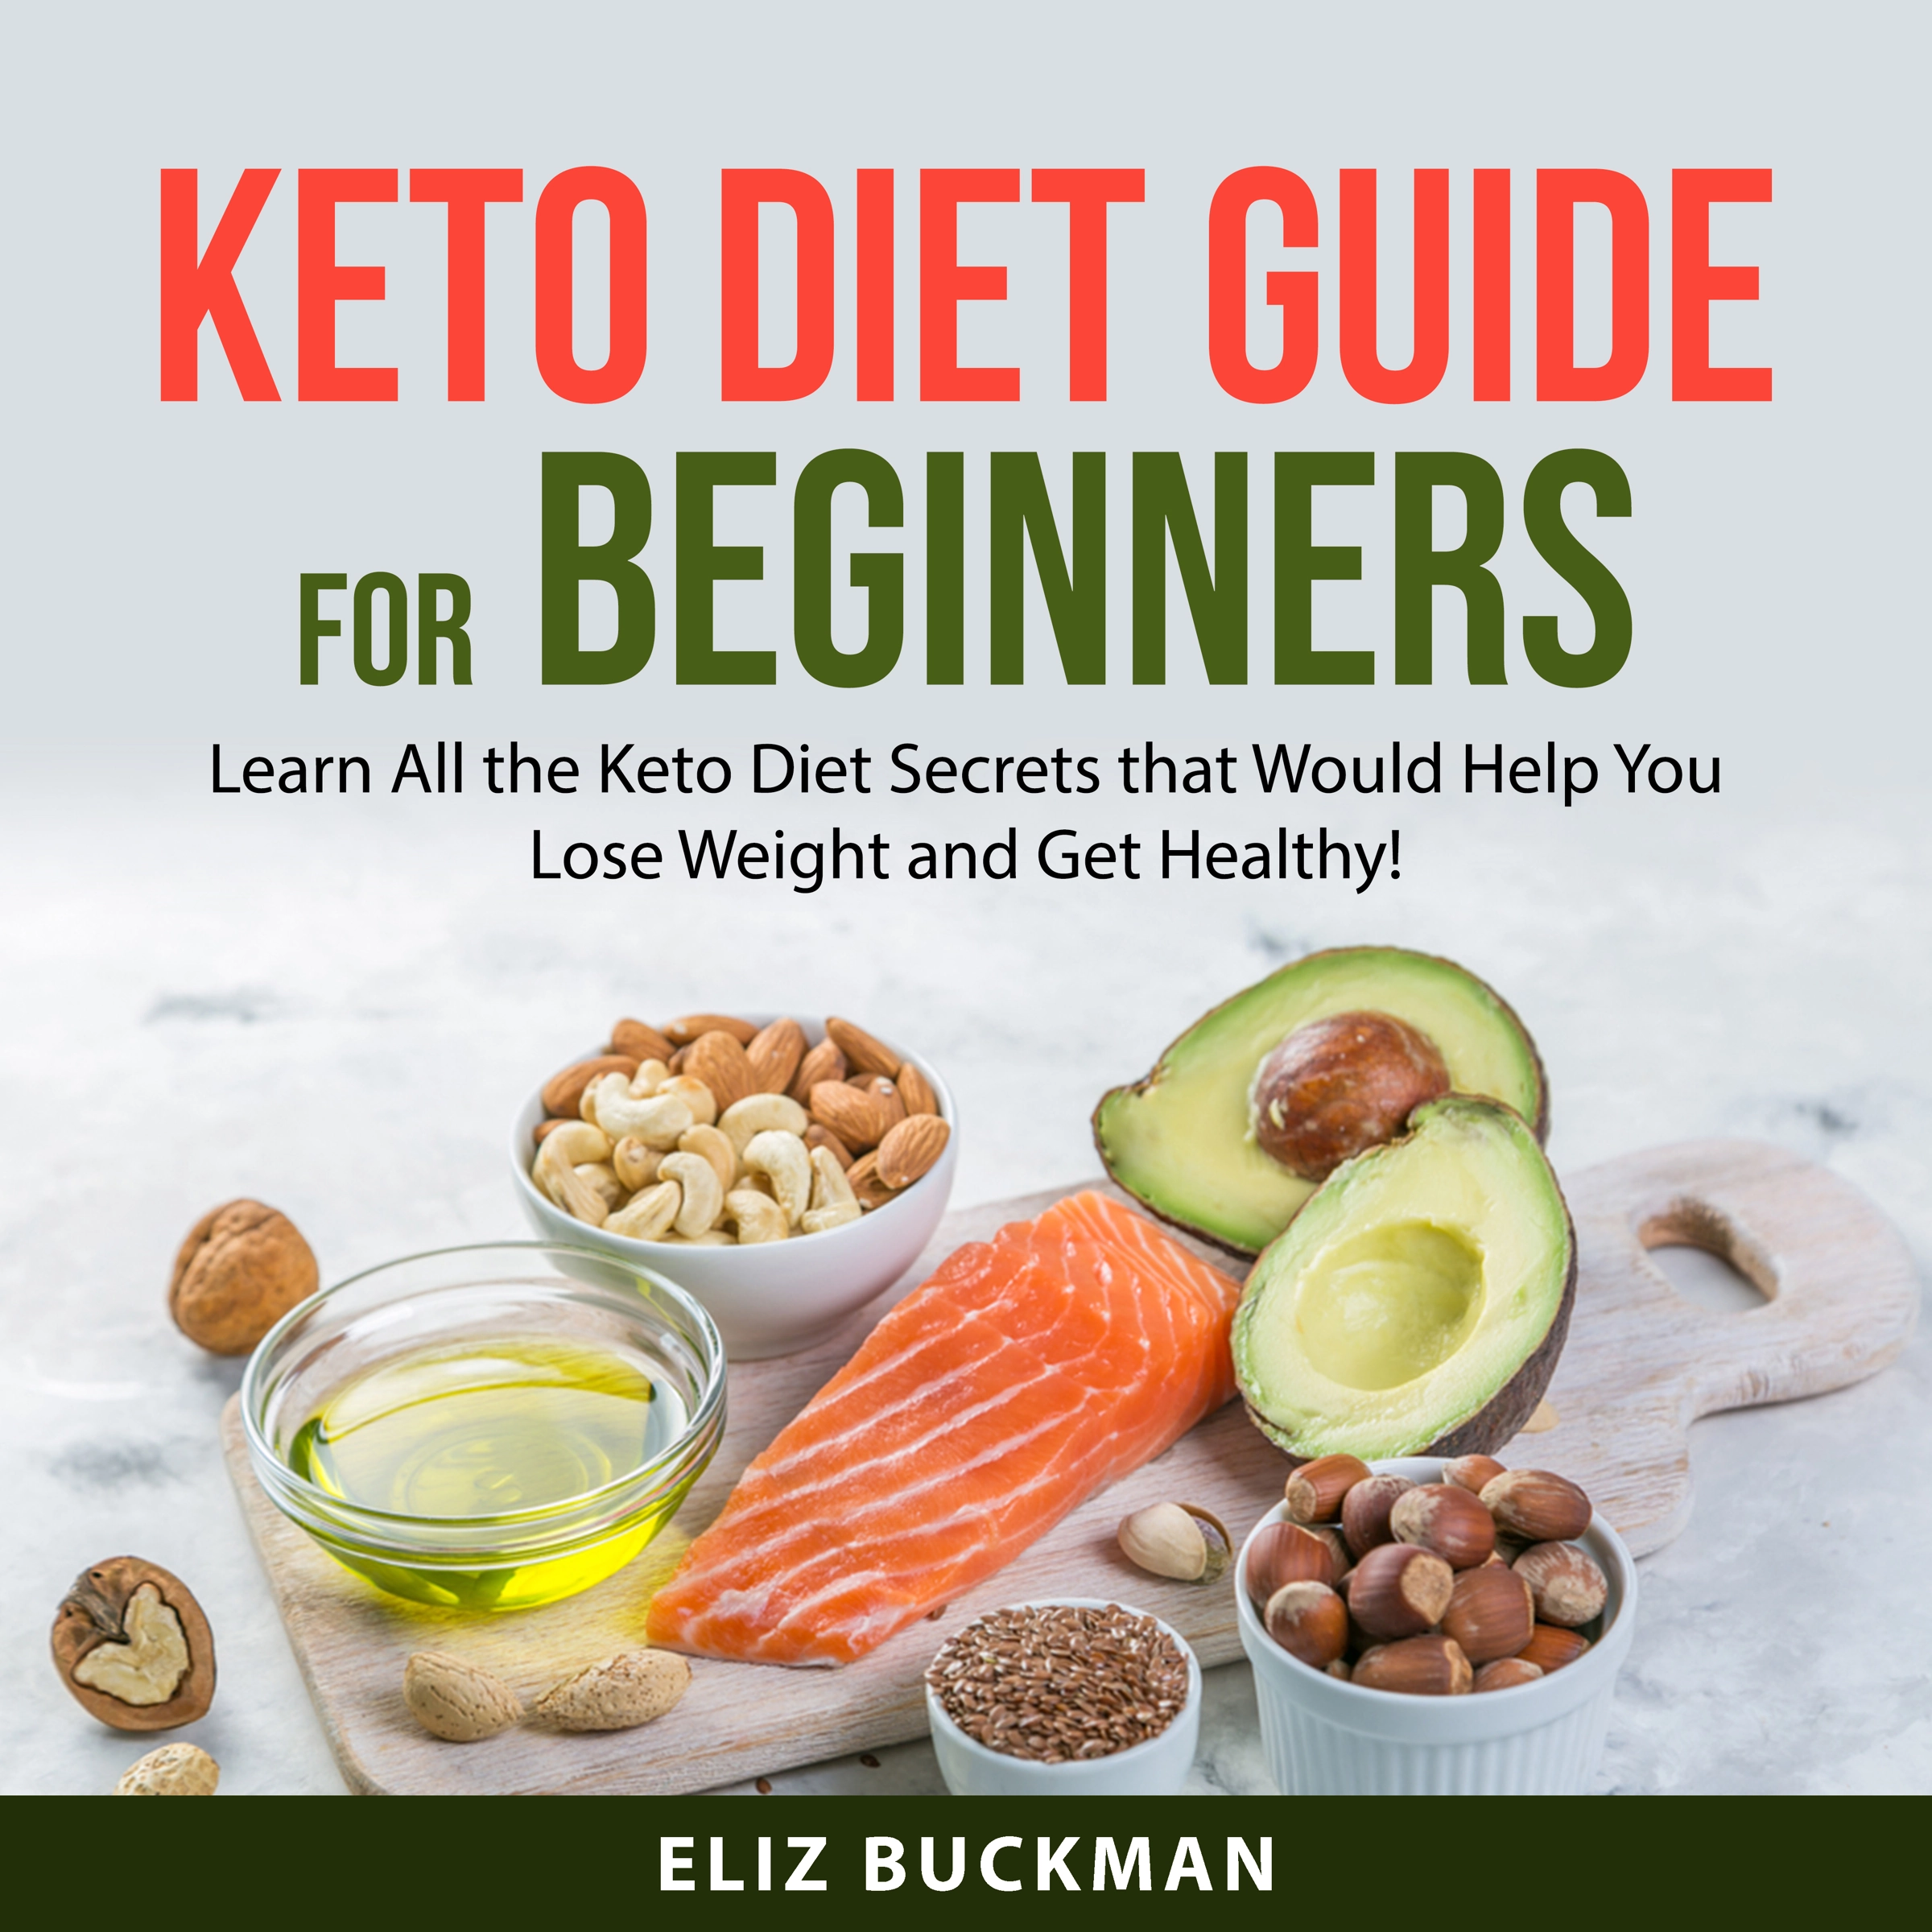 Keto Diet Guide for Beginners Audiobook by Eliz Buckman